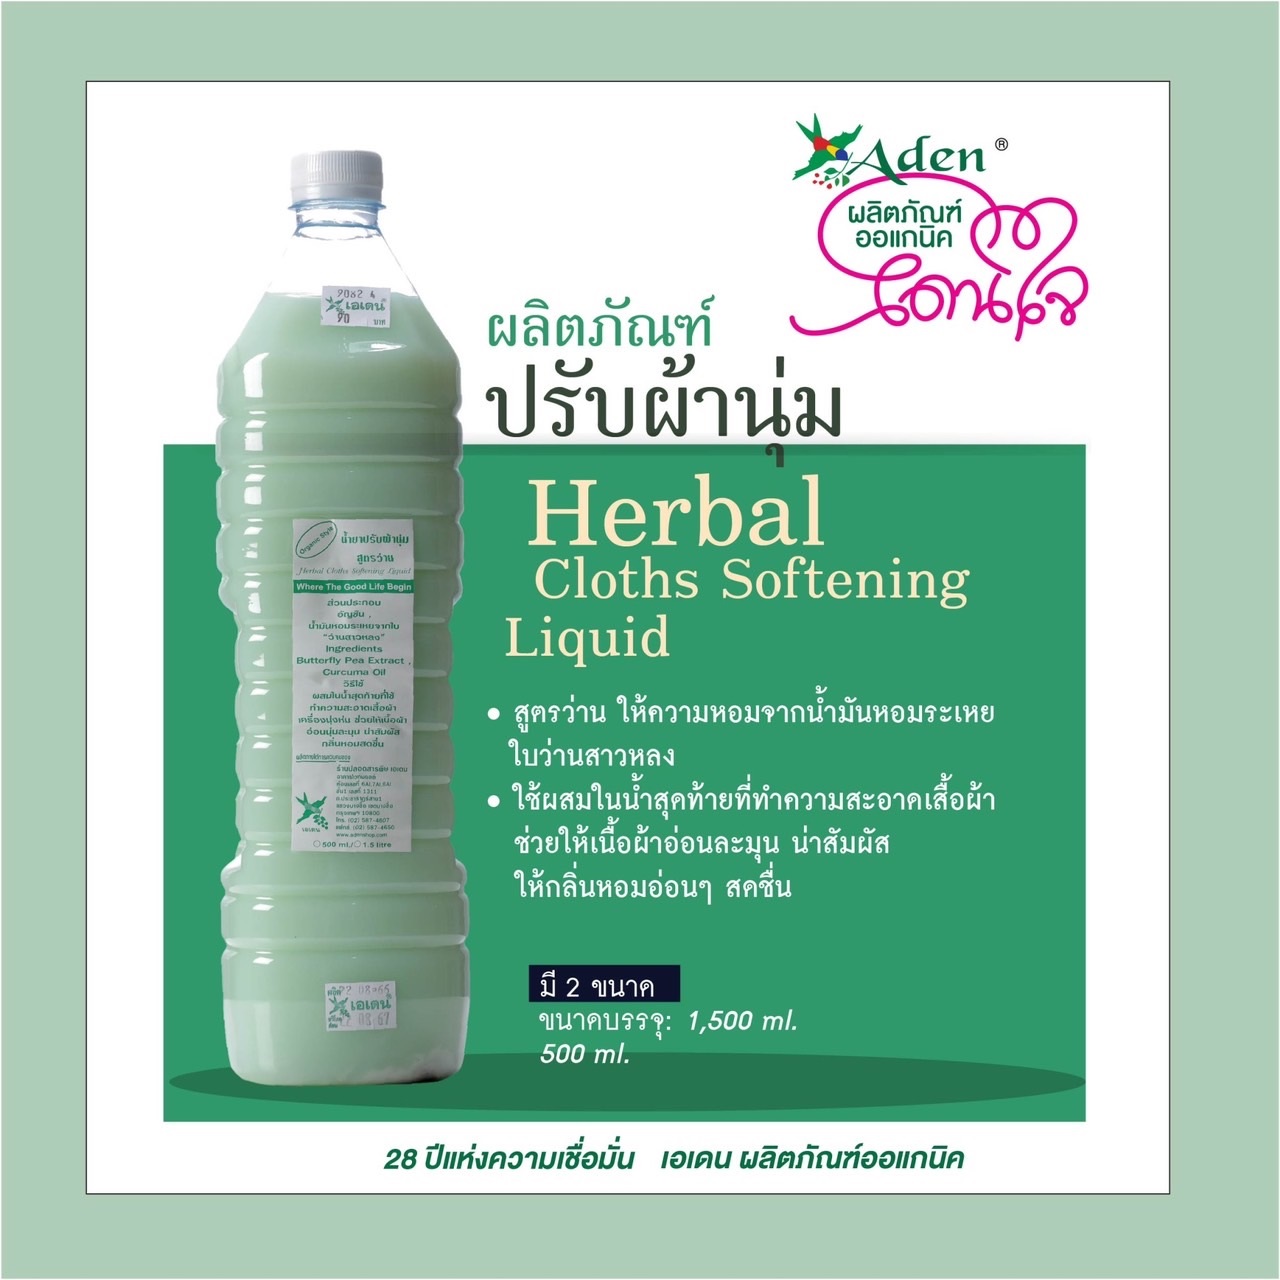 P11-0418 - : - น้ำยาปรับผ้านุ่ม  สูตรว่านสาวหลง ( Herbal cloths softening liguid-Curcuma oil)